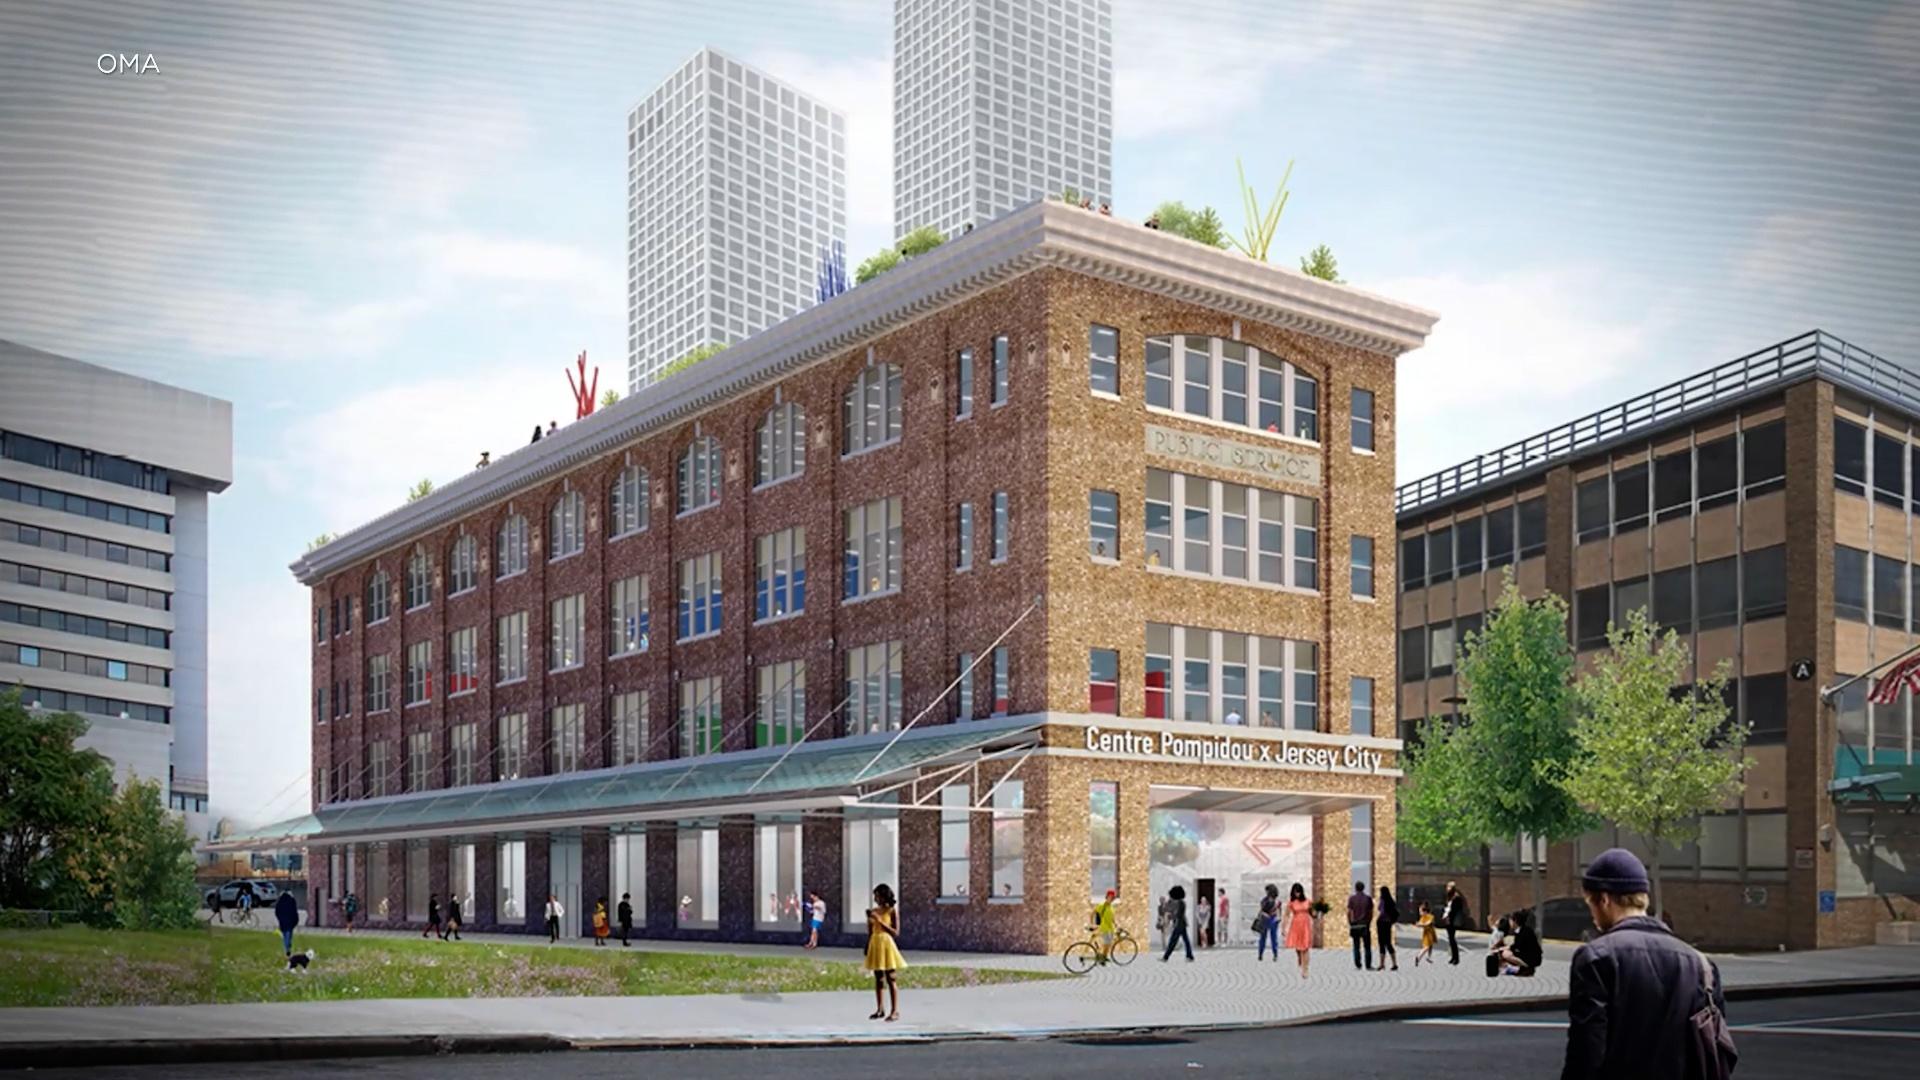 Could Jersey City’s Pompidou museum project lose funding? | NJ Spotlight News